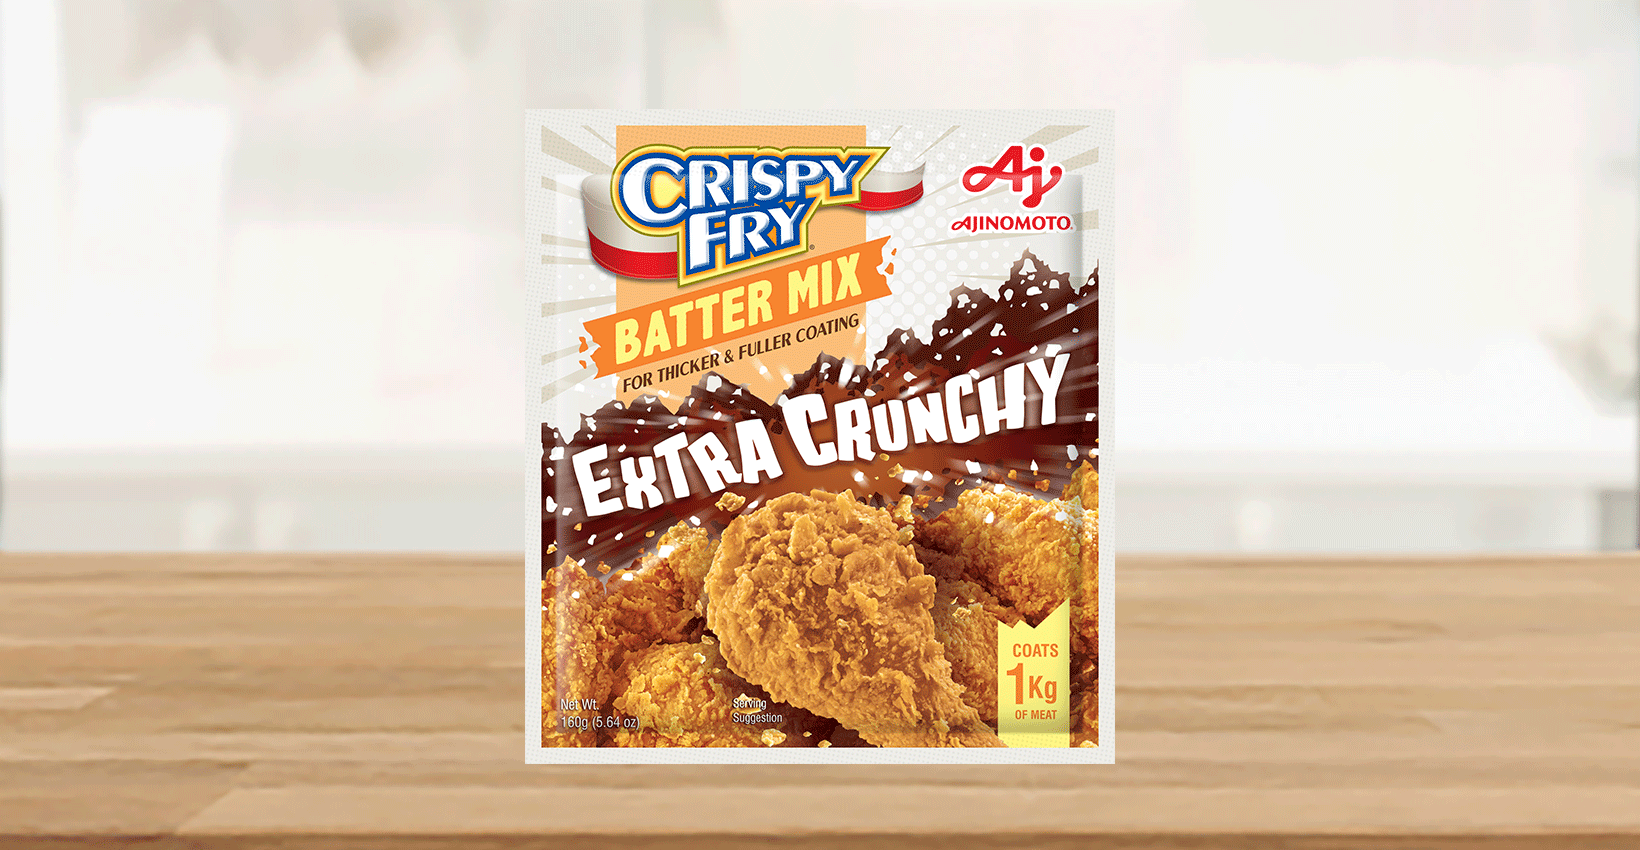 Crispy Fry Batter Mix